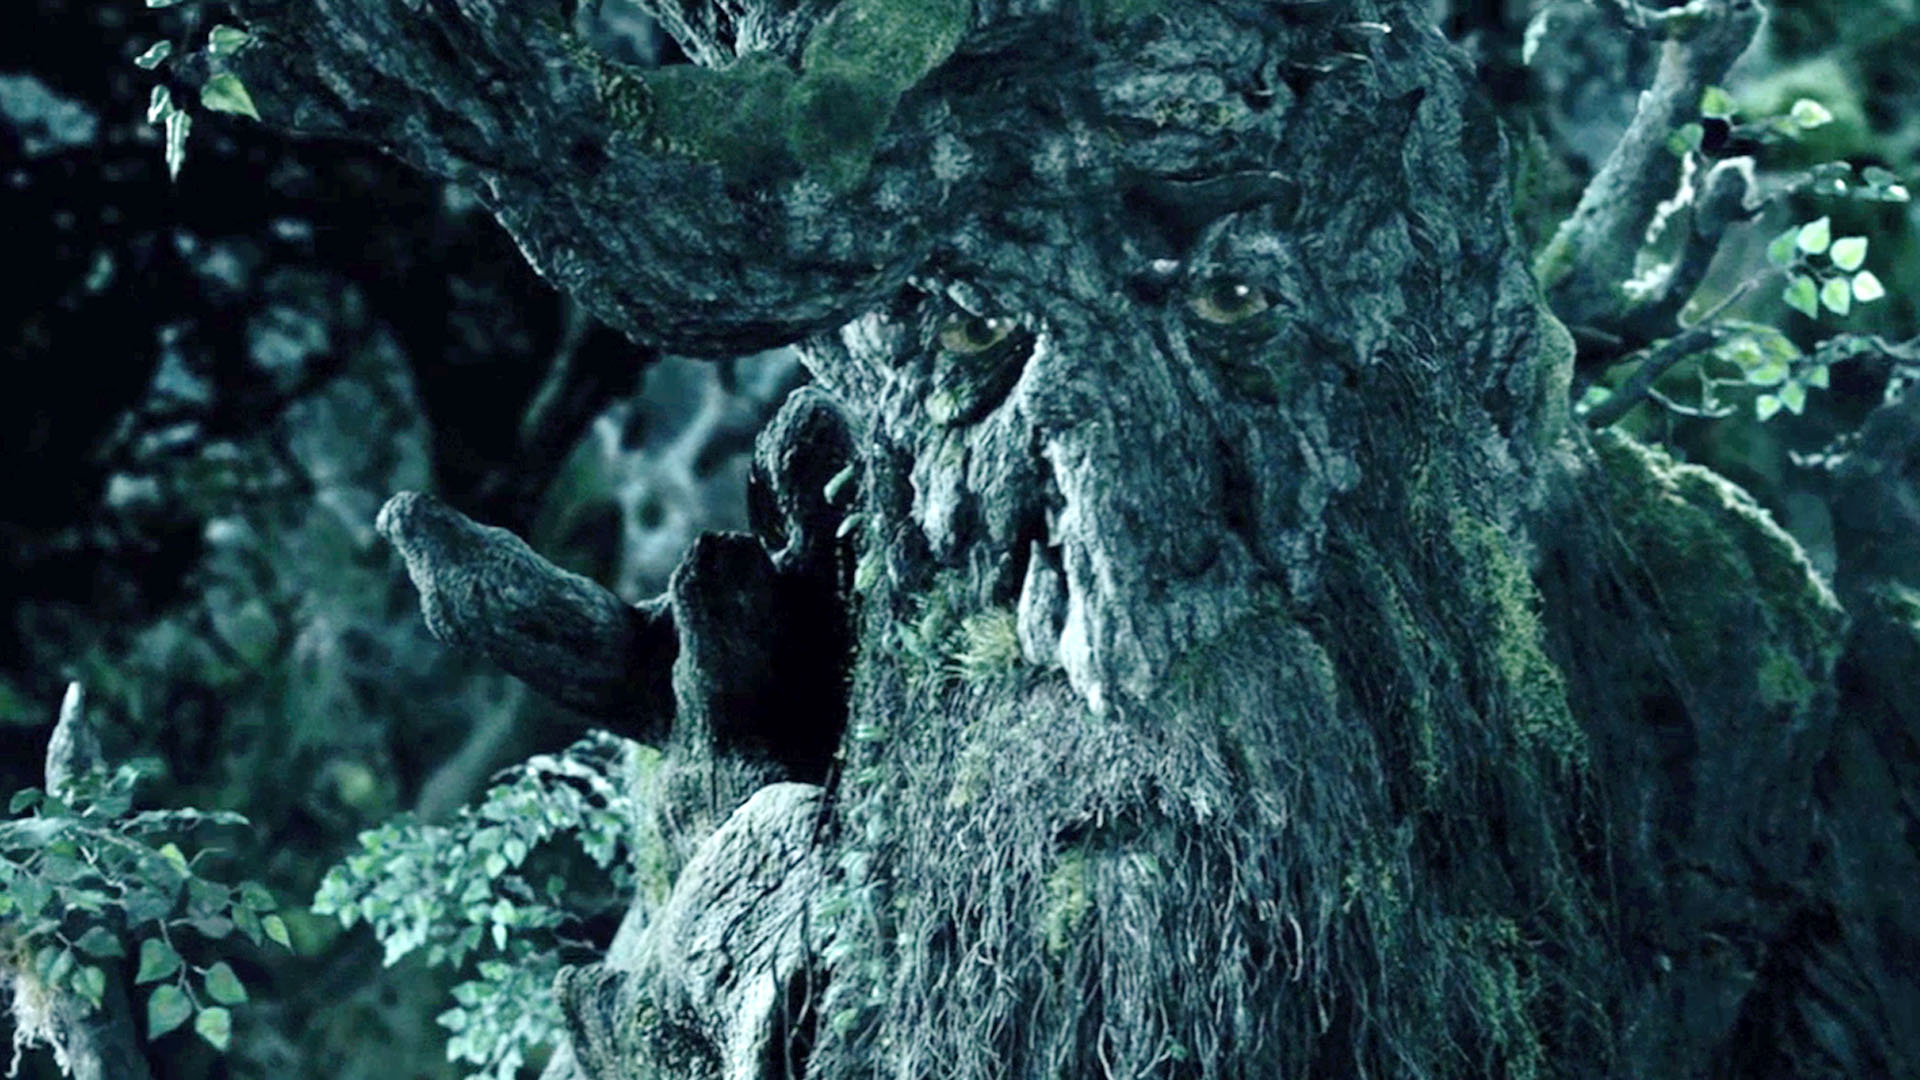 Treebeard: Voiced by John Rhys-Davies in Peter Jackson's films. 1920x1080 Full HD Wallpaper.